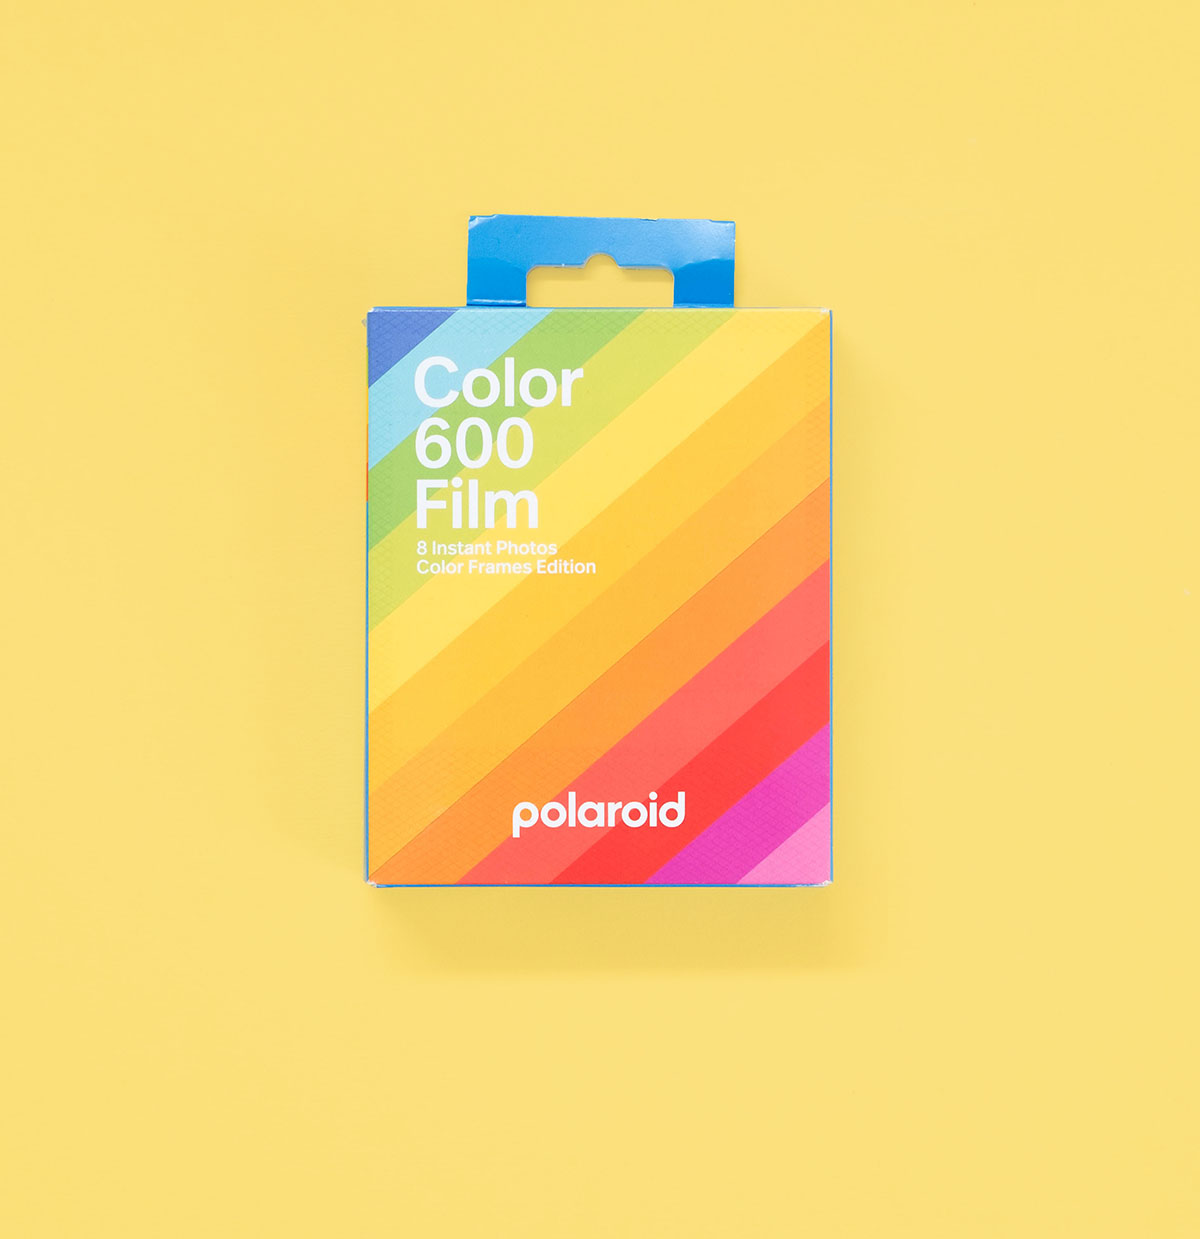 Polaroid Camera Film - Color Film for 600